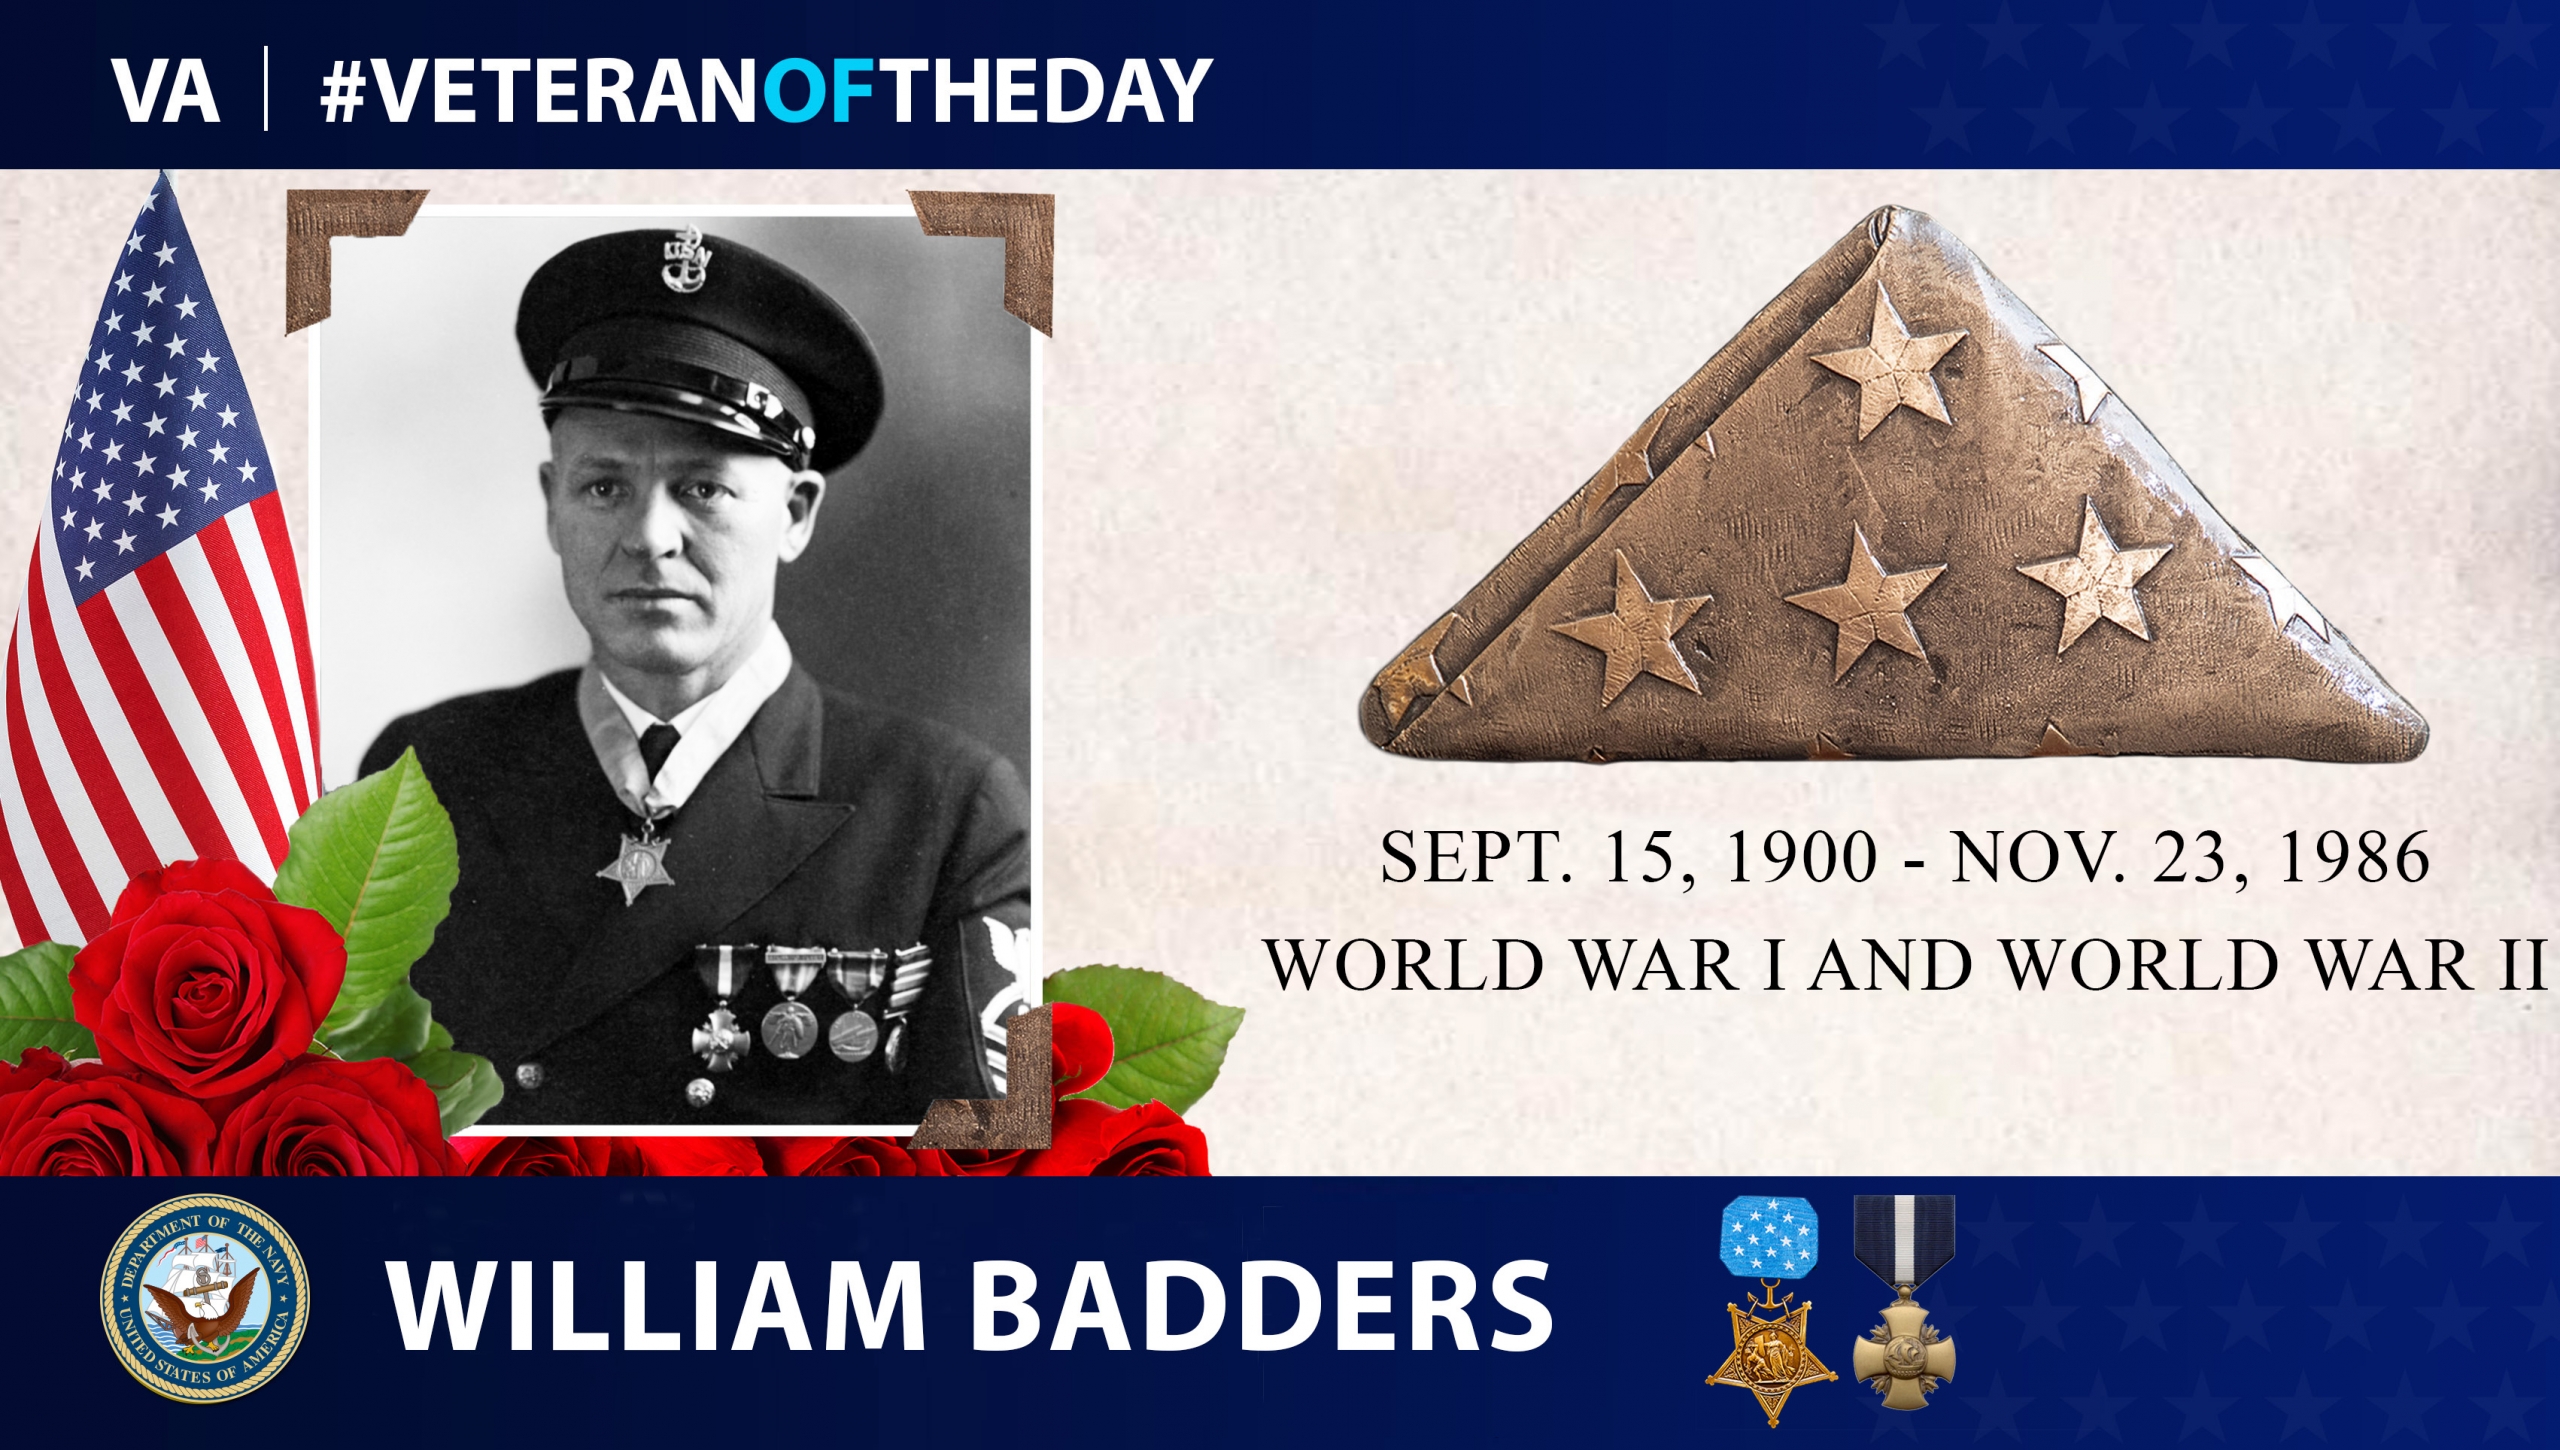 Navy Veteran William Badders is today’s Veteran of the Day.